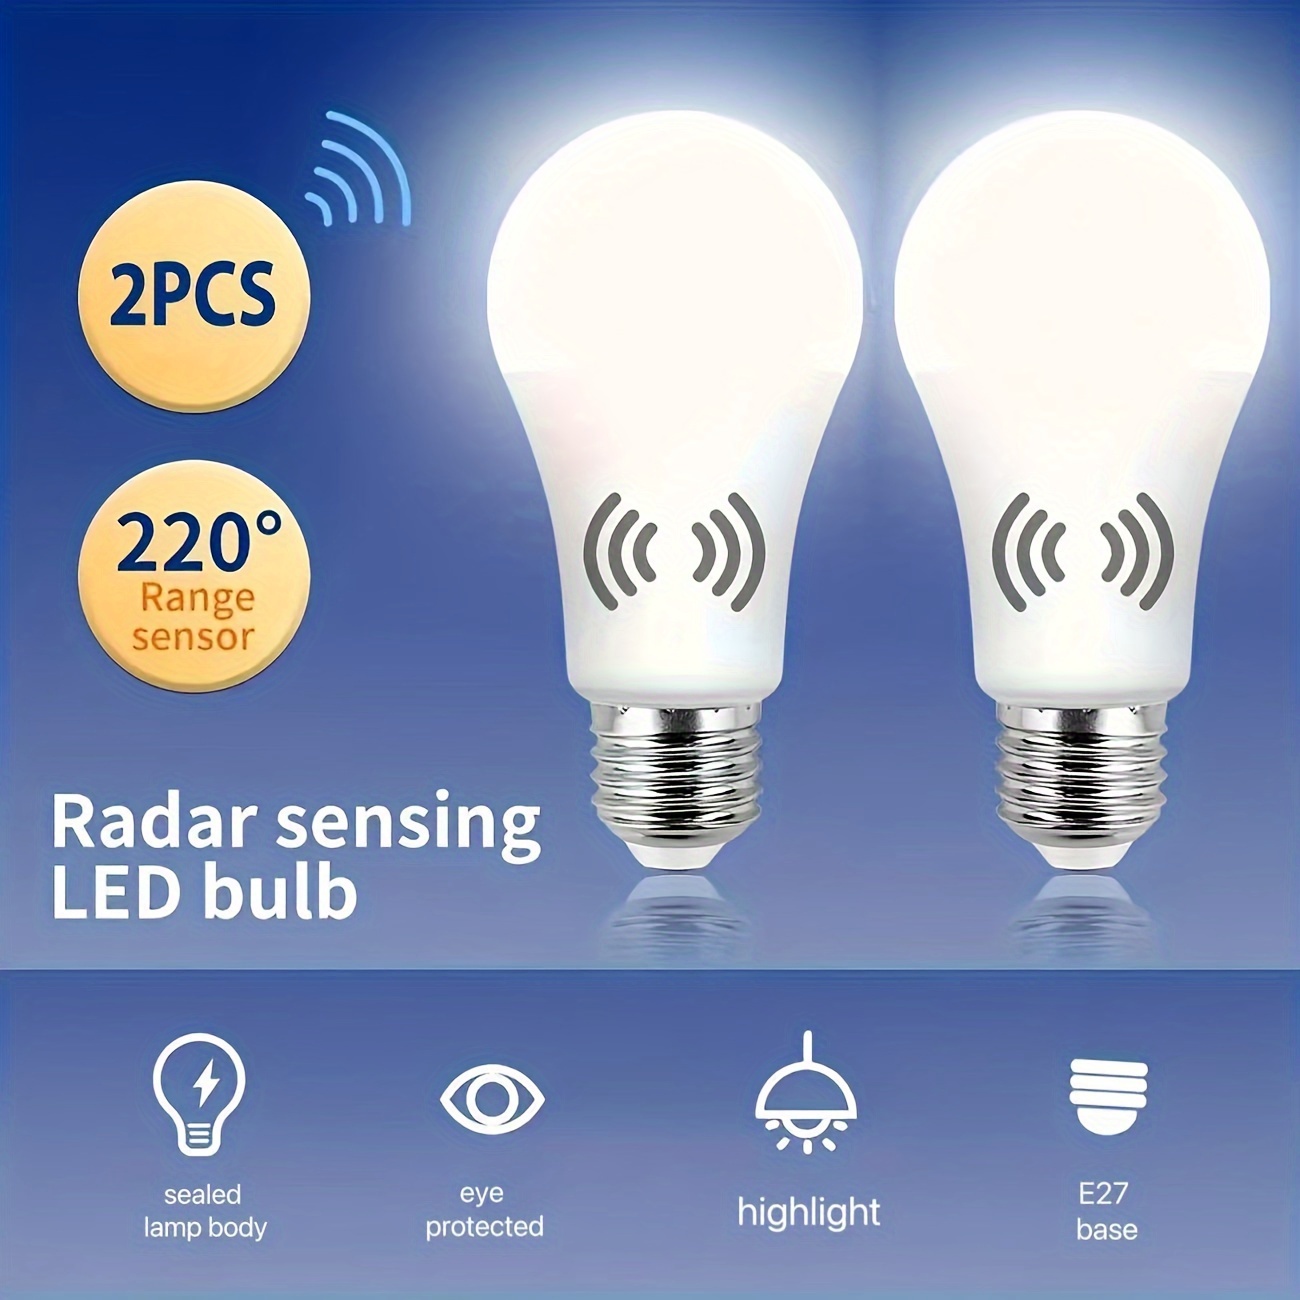 Remote Control Lamp LED Light E27 28W Natural White PIR Motion Sensor  Folding LED Lamps Bulb 110V/220V With Timing Function Home